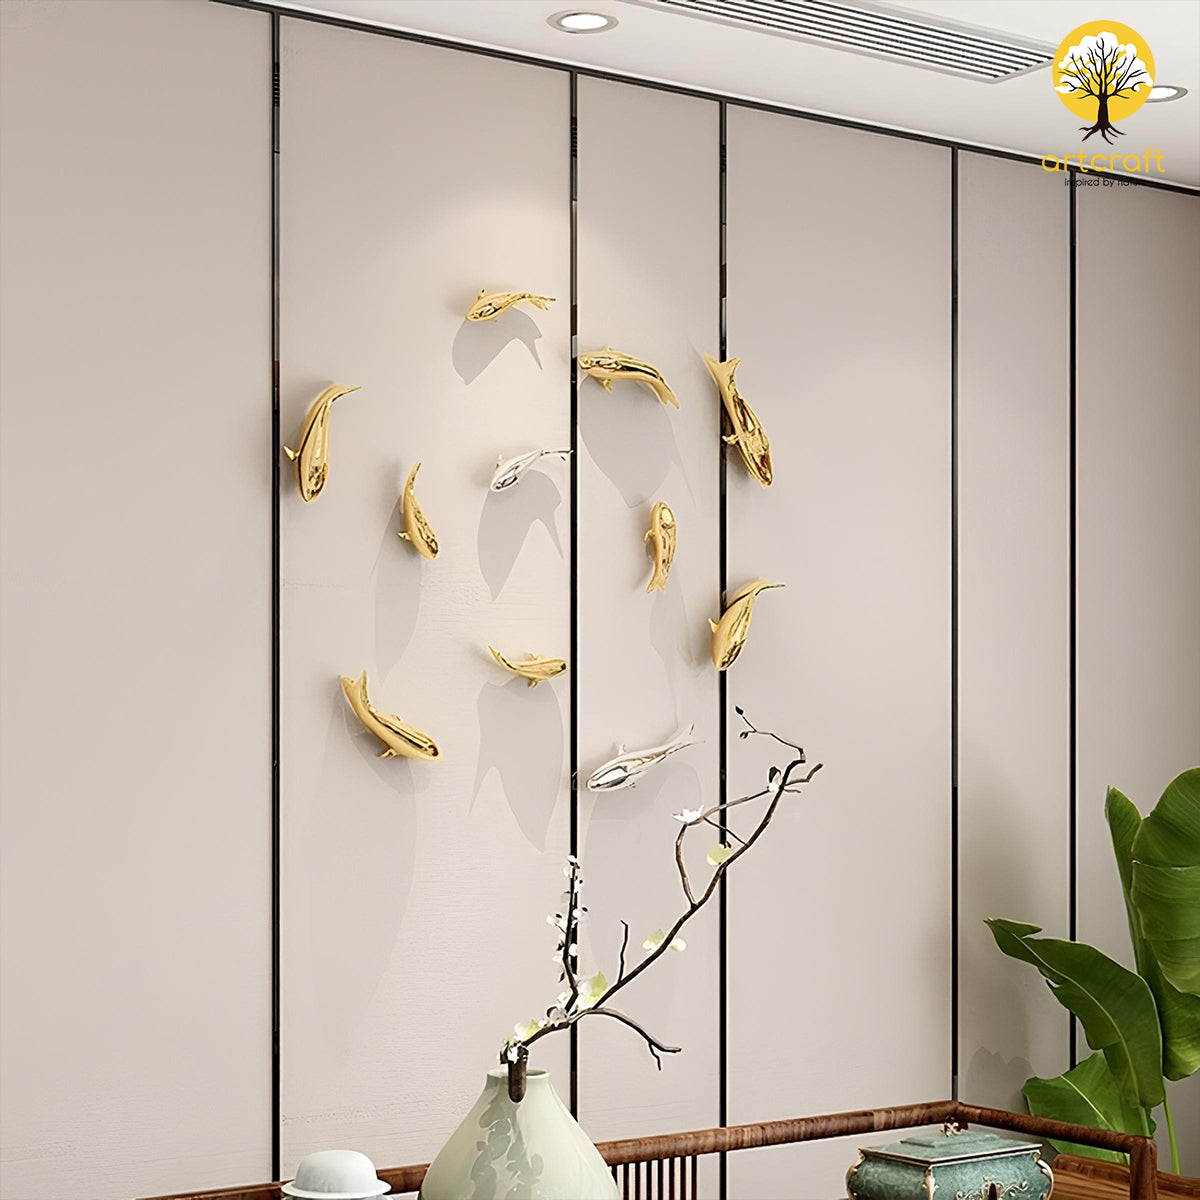 Arrowana fish wall decor - 100% Made in Pure Brass